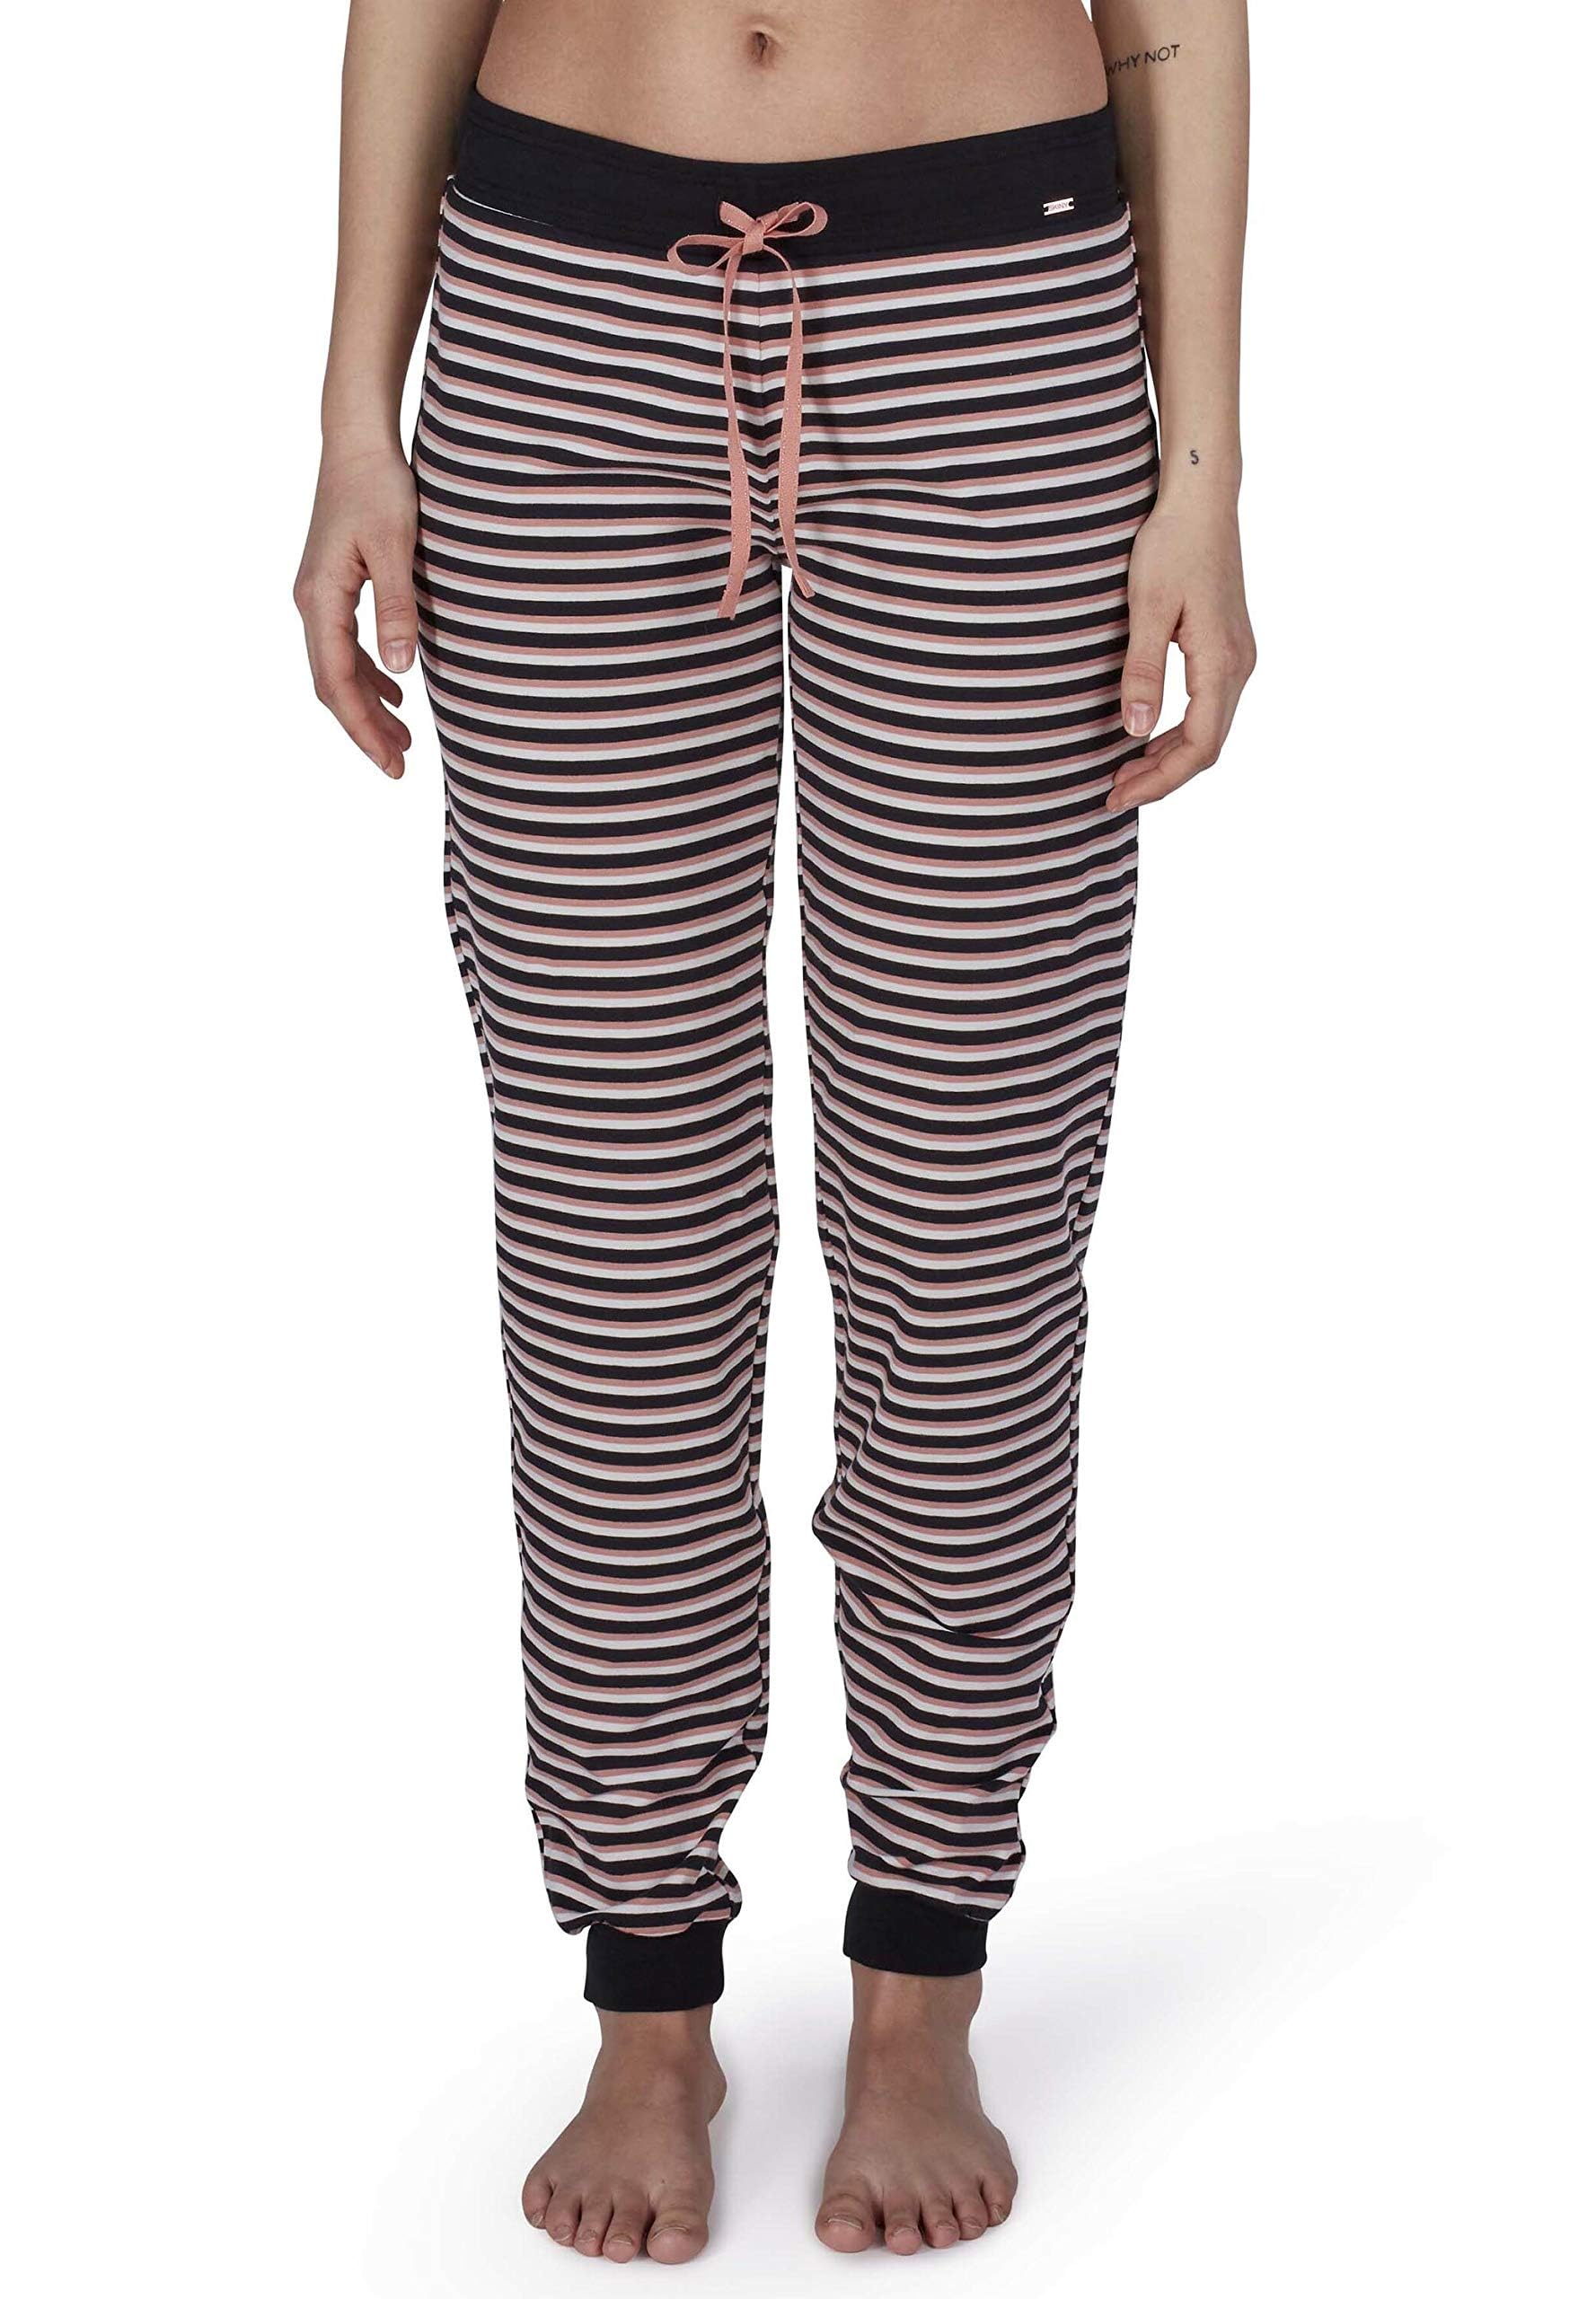 Skiny Damen Sleep & Dream Hose lang Schlafanzughose, rose black stripe, 36